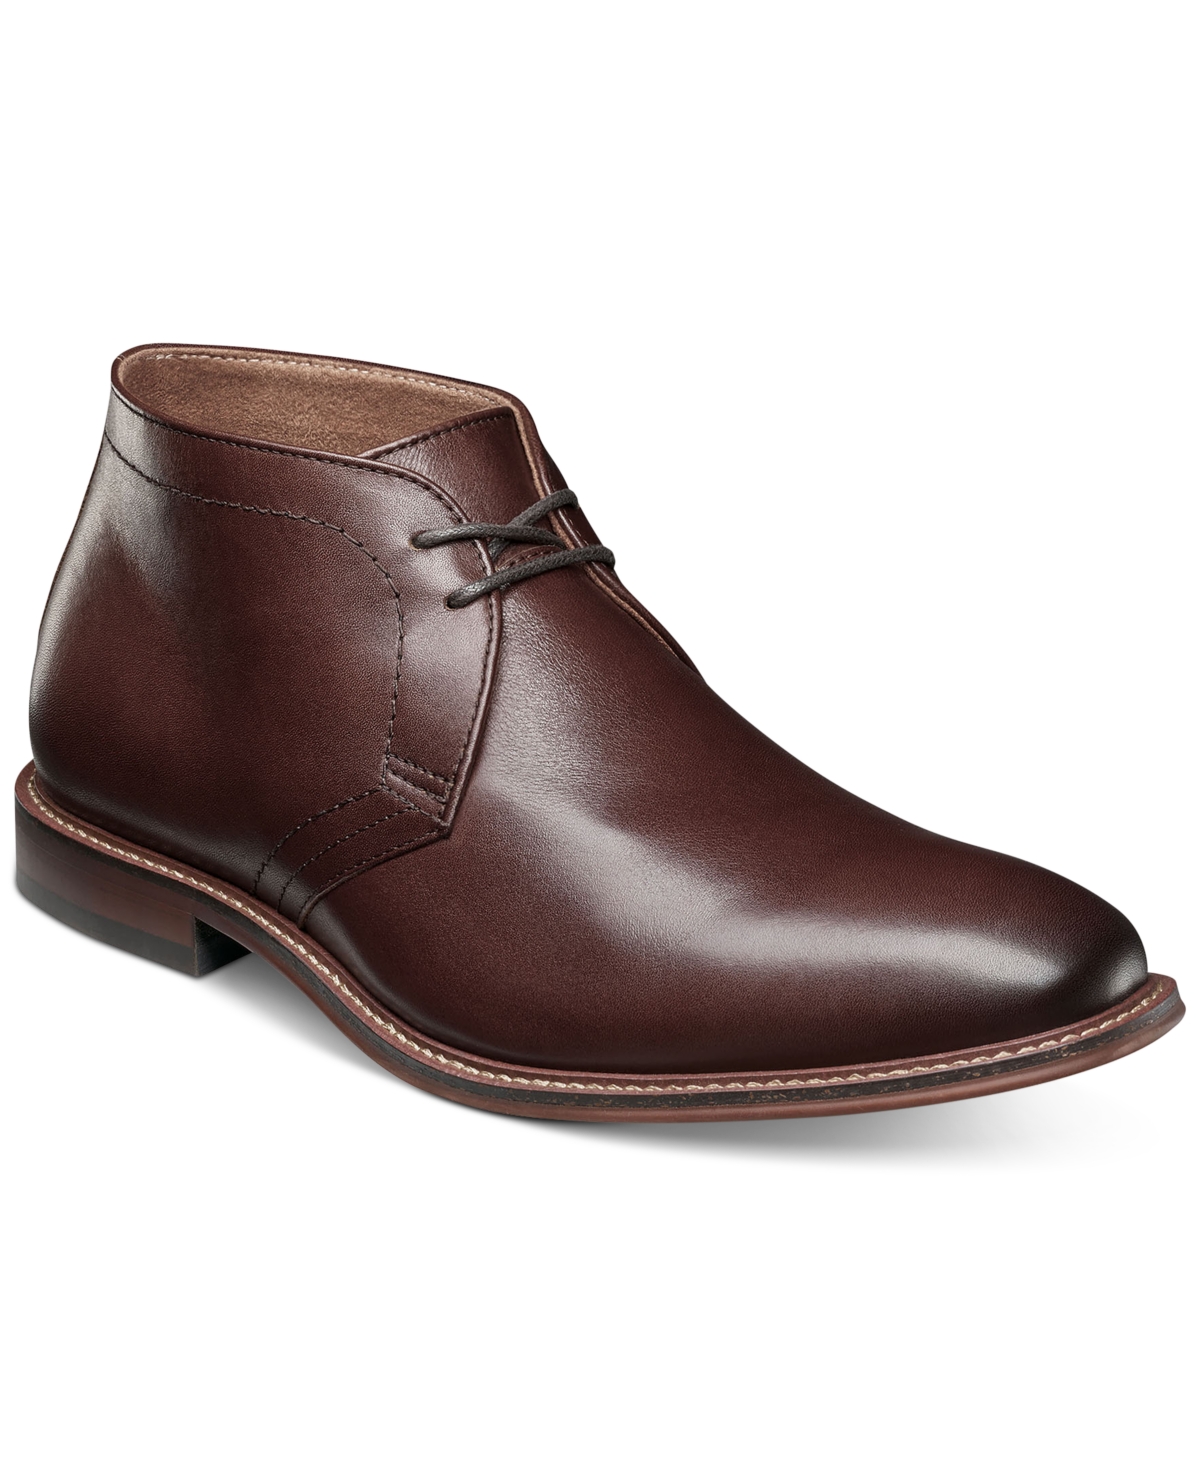 Men's Martindale Leather Plain Toe Chukka Boots - Bordeaux